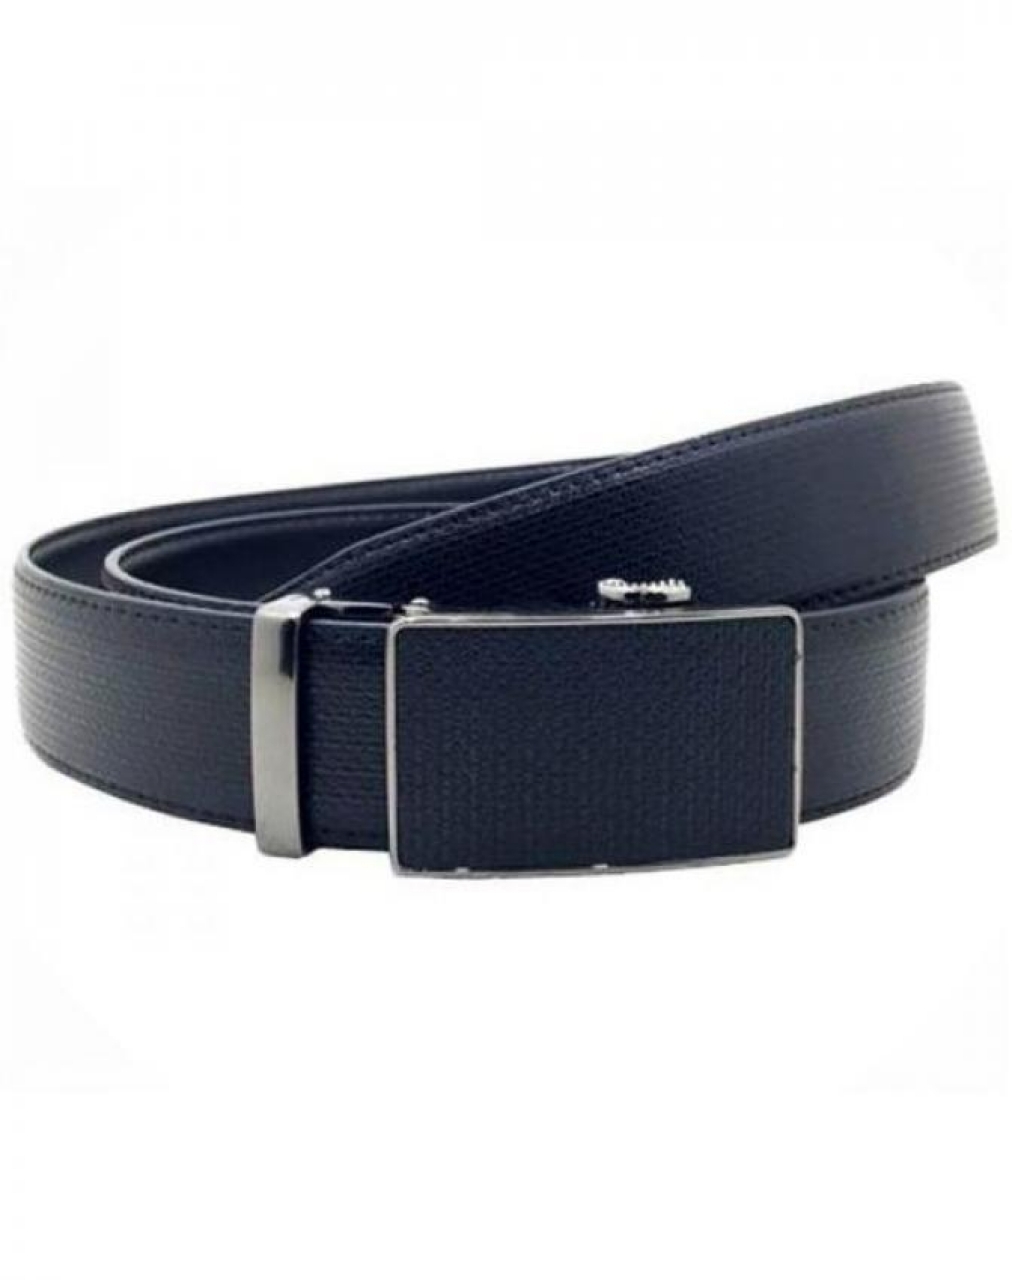 Buy Leather Belt For Men in Pakistan | Affordable.pk